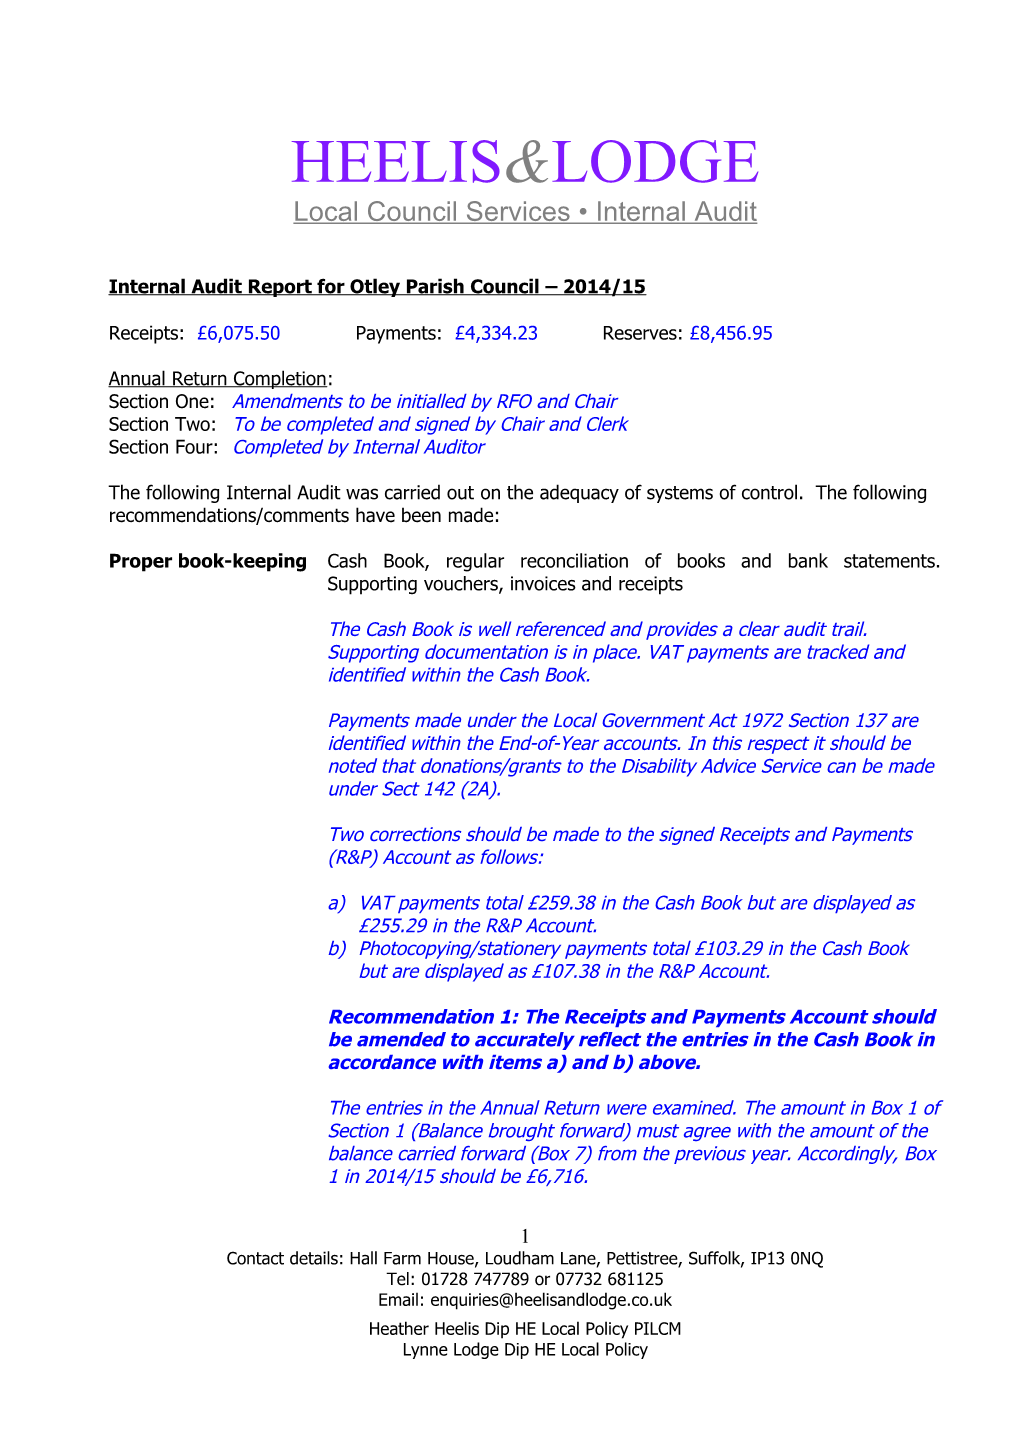 Internal Audit Report for Otley Parish Council 2014/15